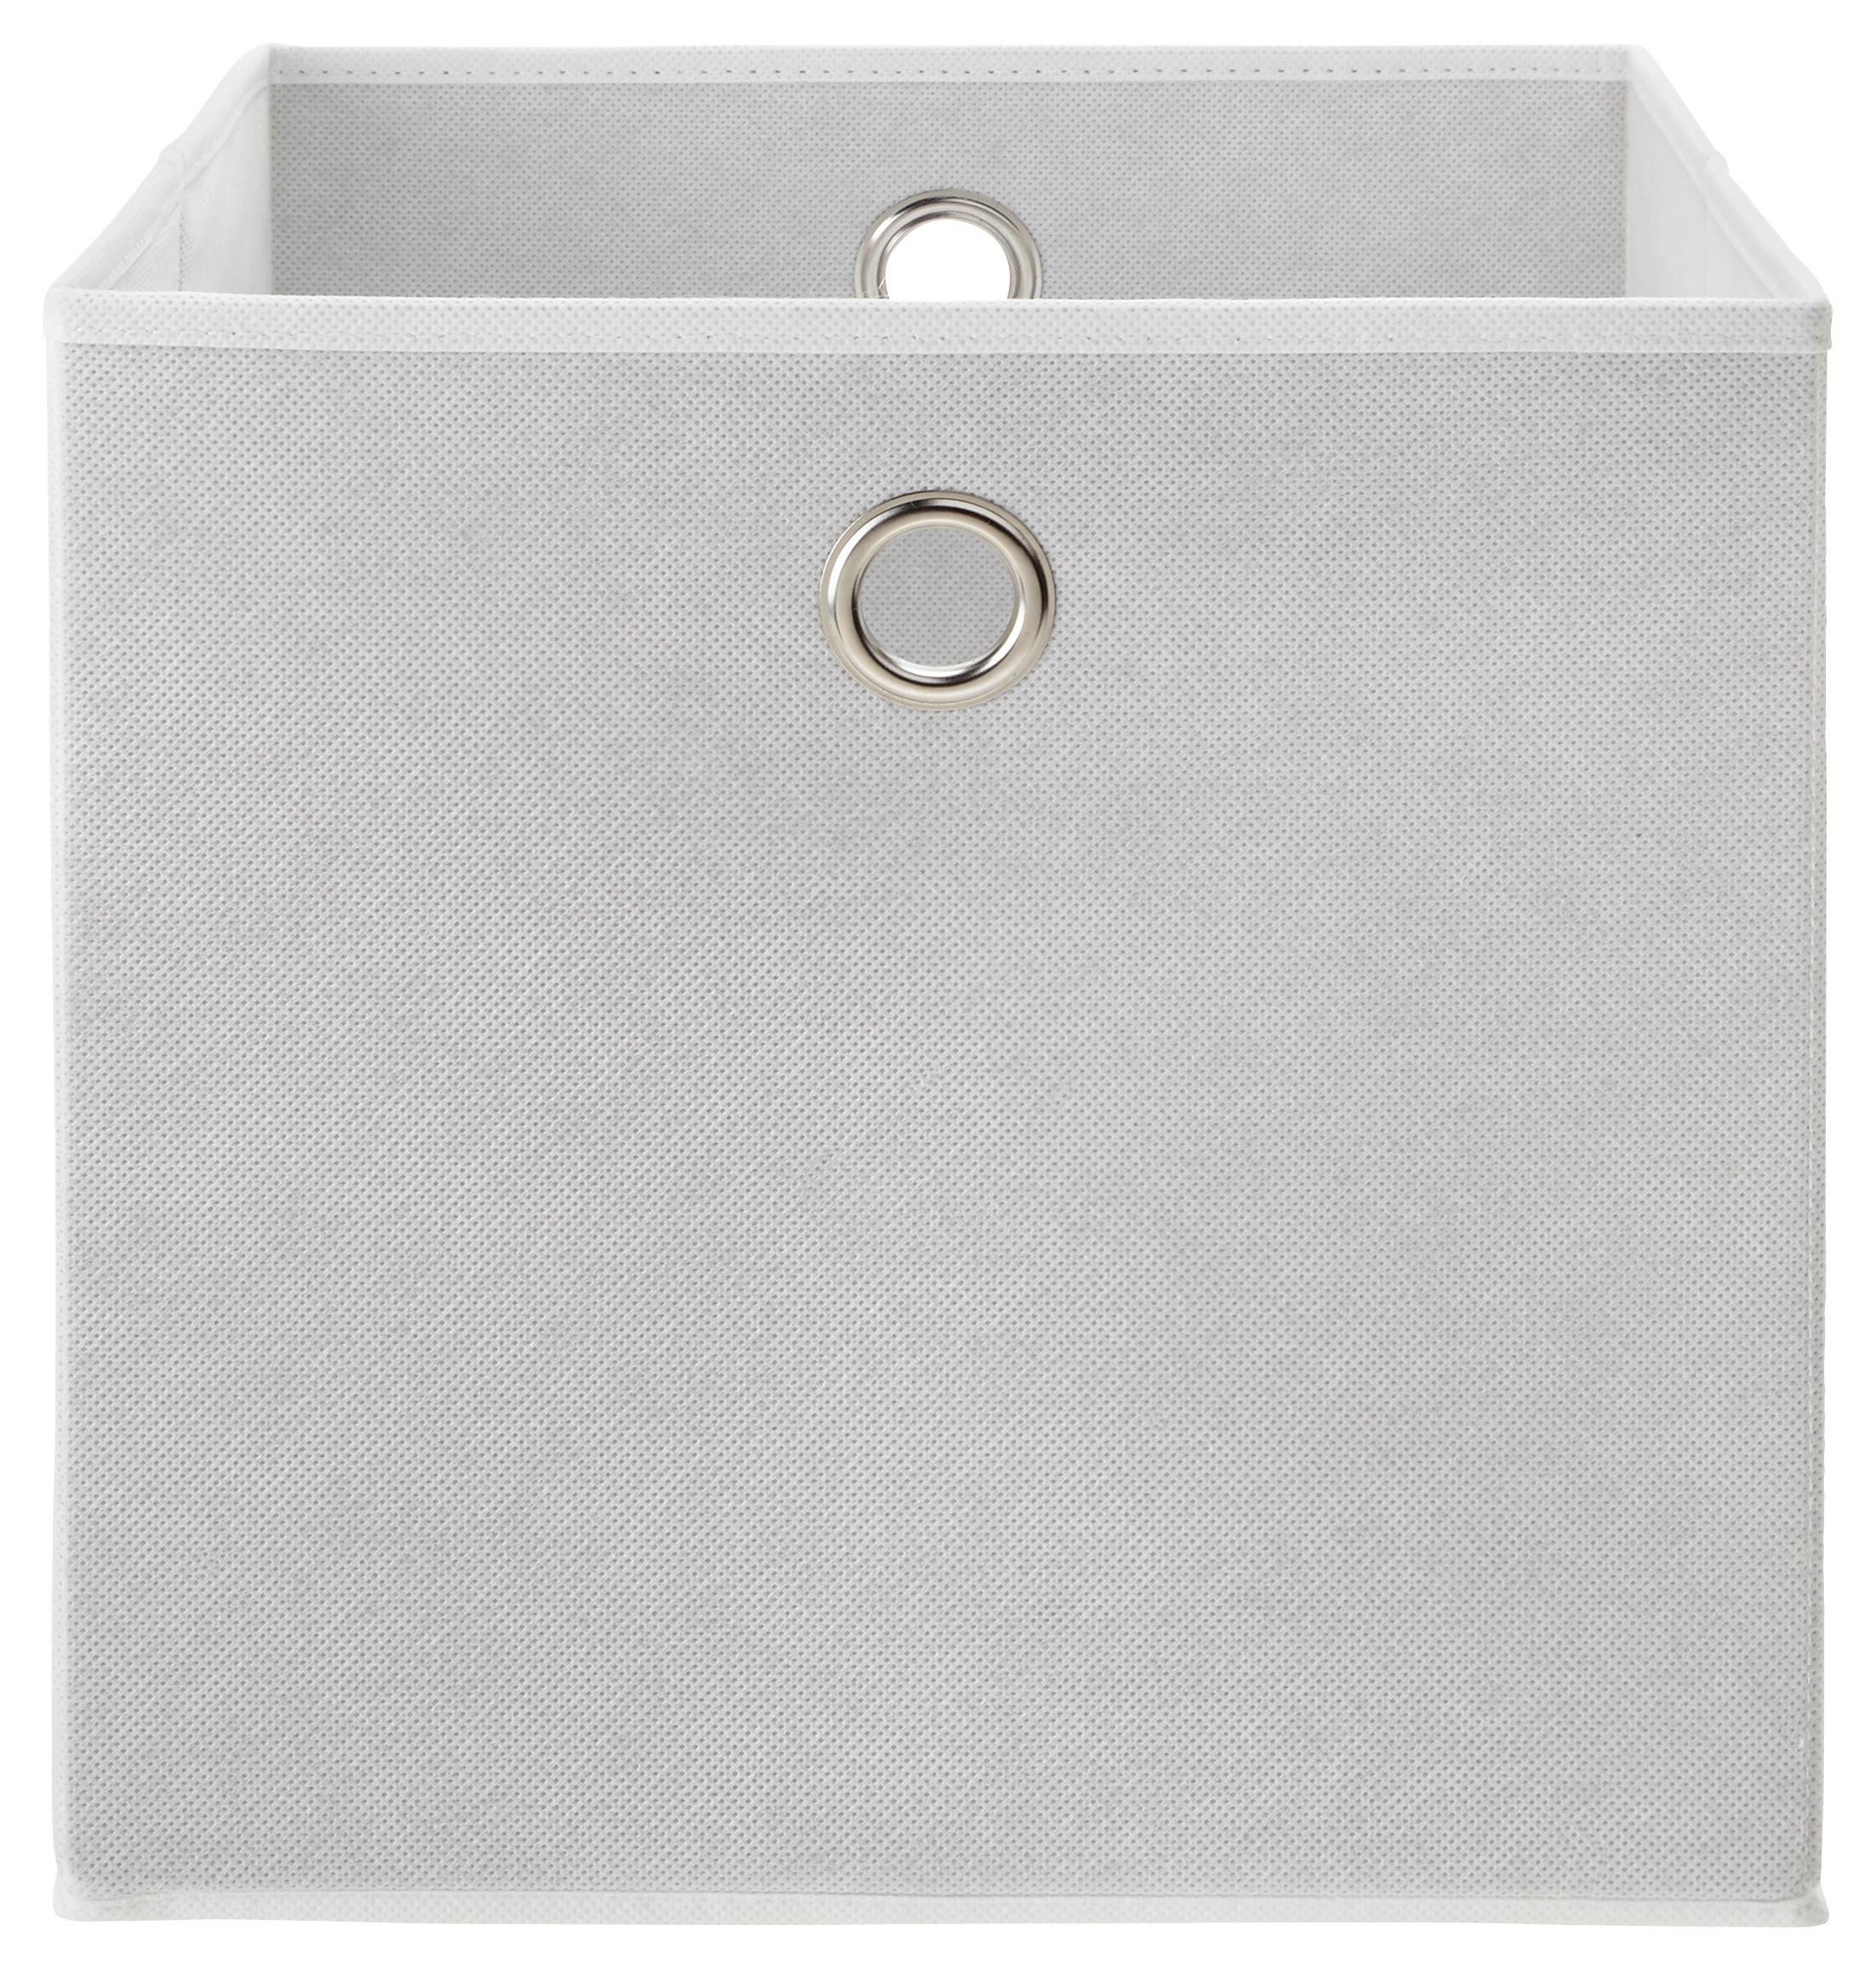 Faltbox Fibi in Weiß - Weiß, MODERN, Karton/Textil (30/30/30cm) - Modern Living